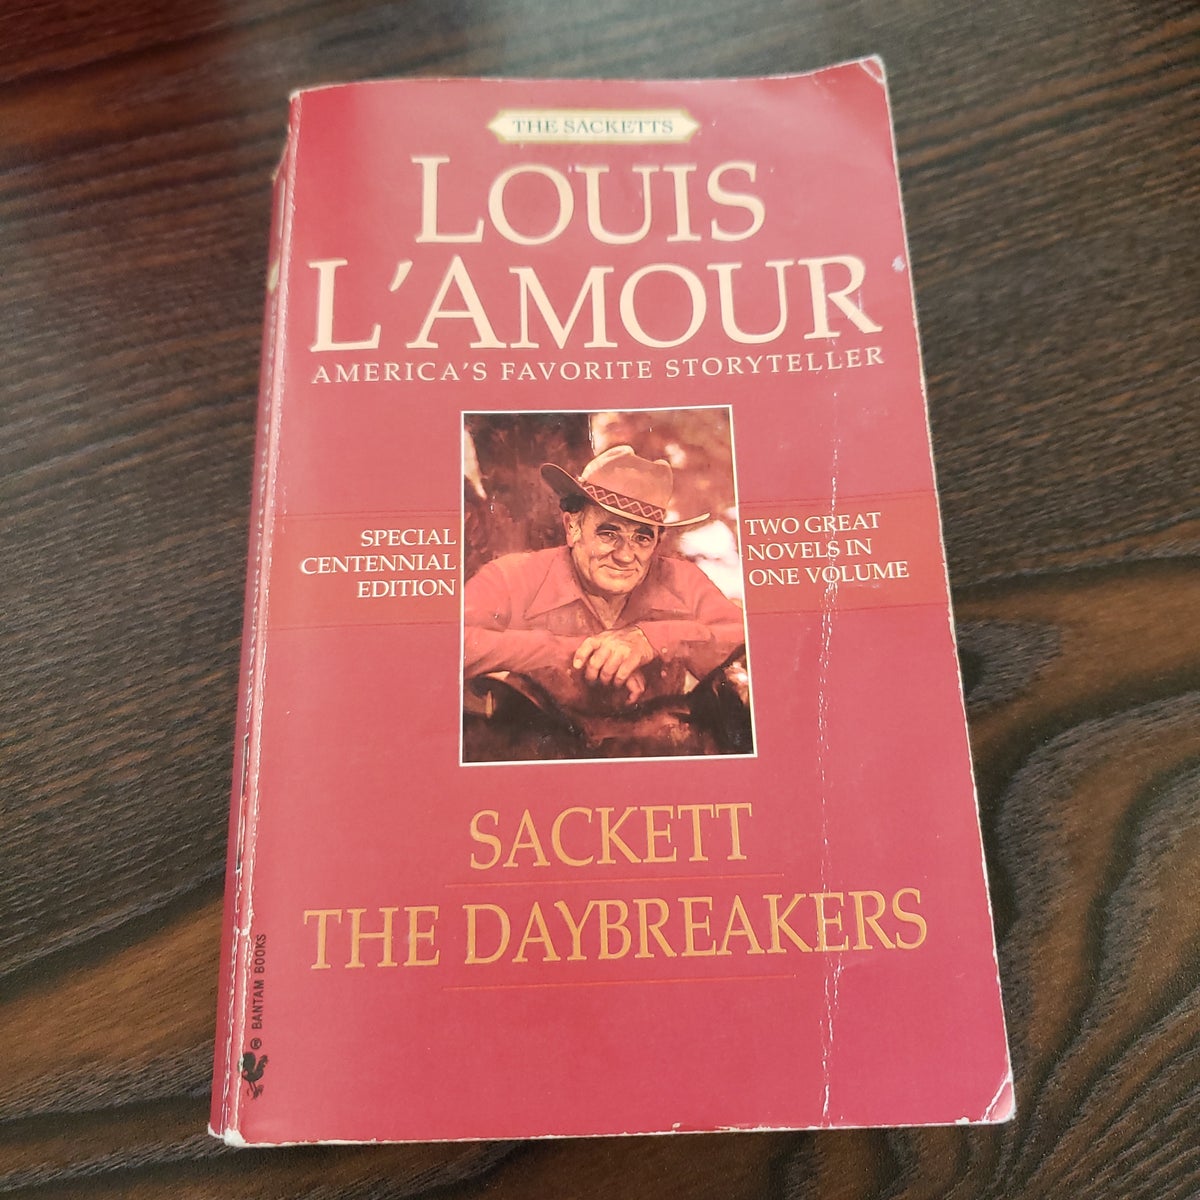 Sackett's Land - A Sackett novel by Louis L'Amour